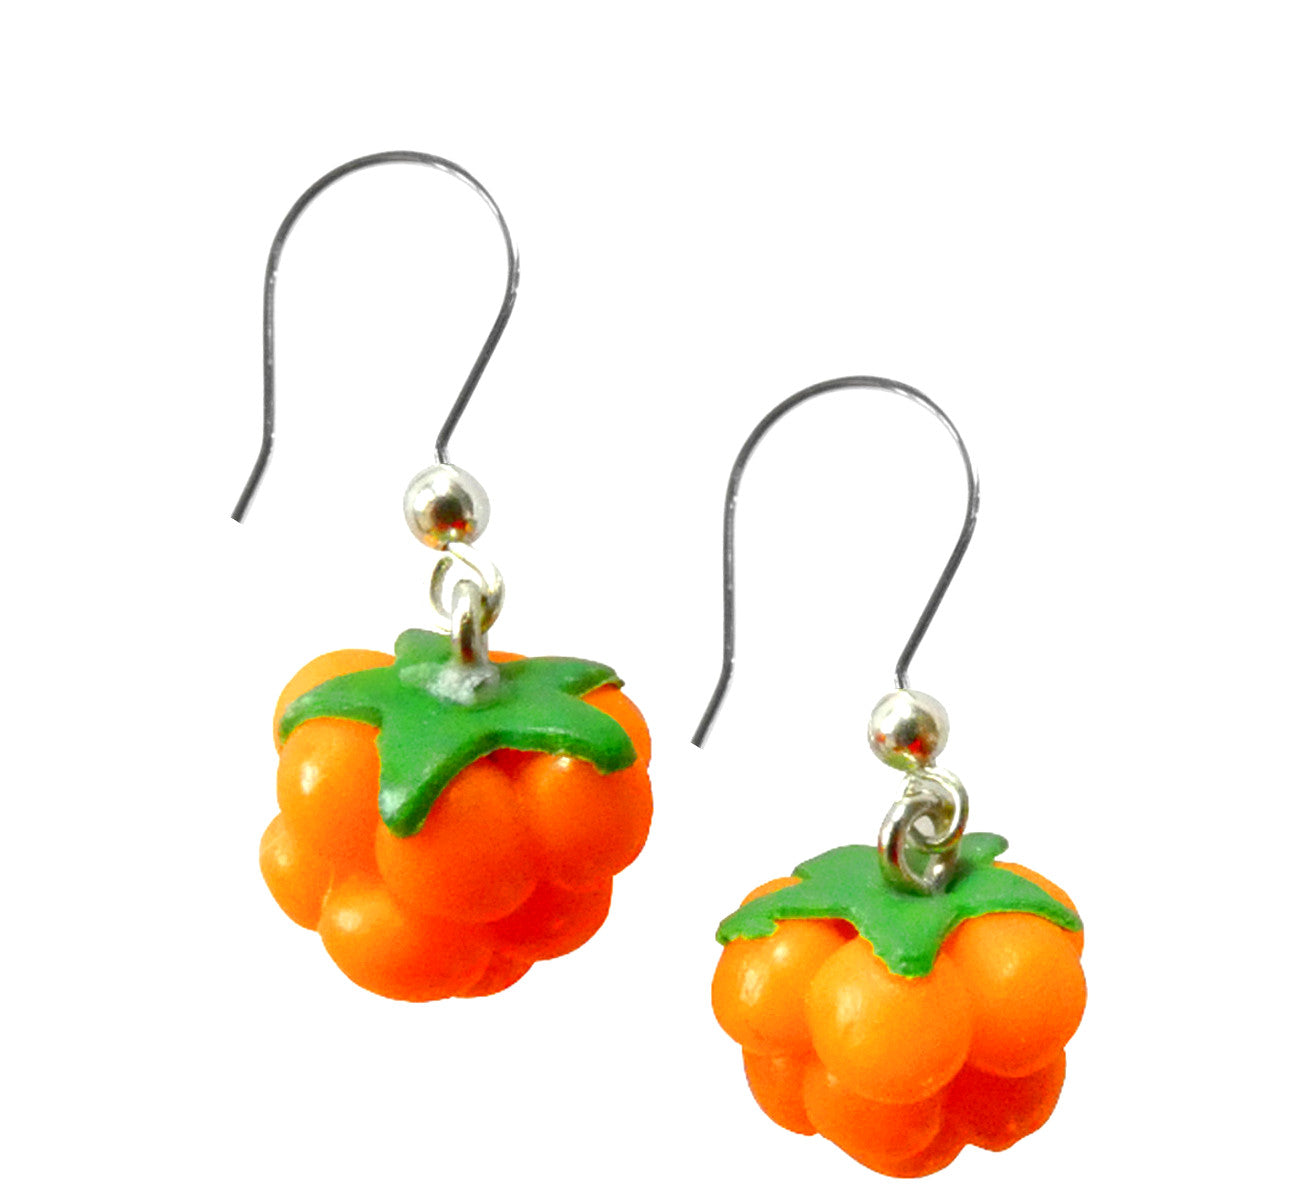 Orange real looking cloudberry earrings, polymeric clay, size 1.2x1.2 cm, 0.47x0.47 inch, handmade Scandinavian.